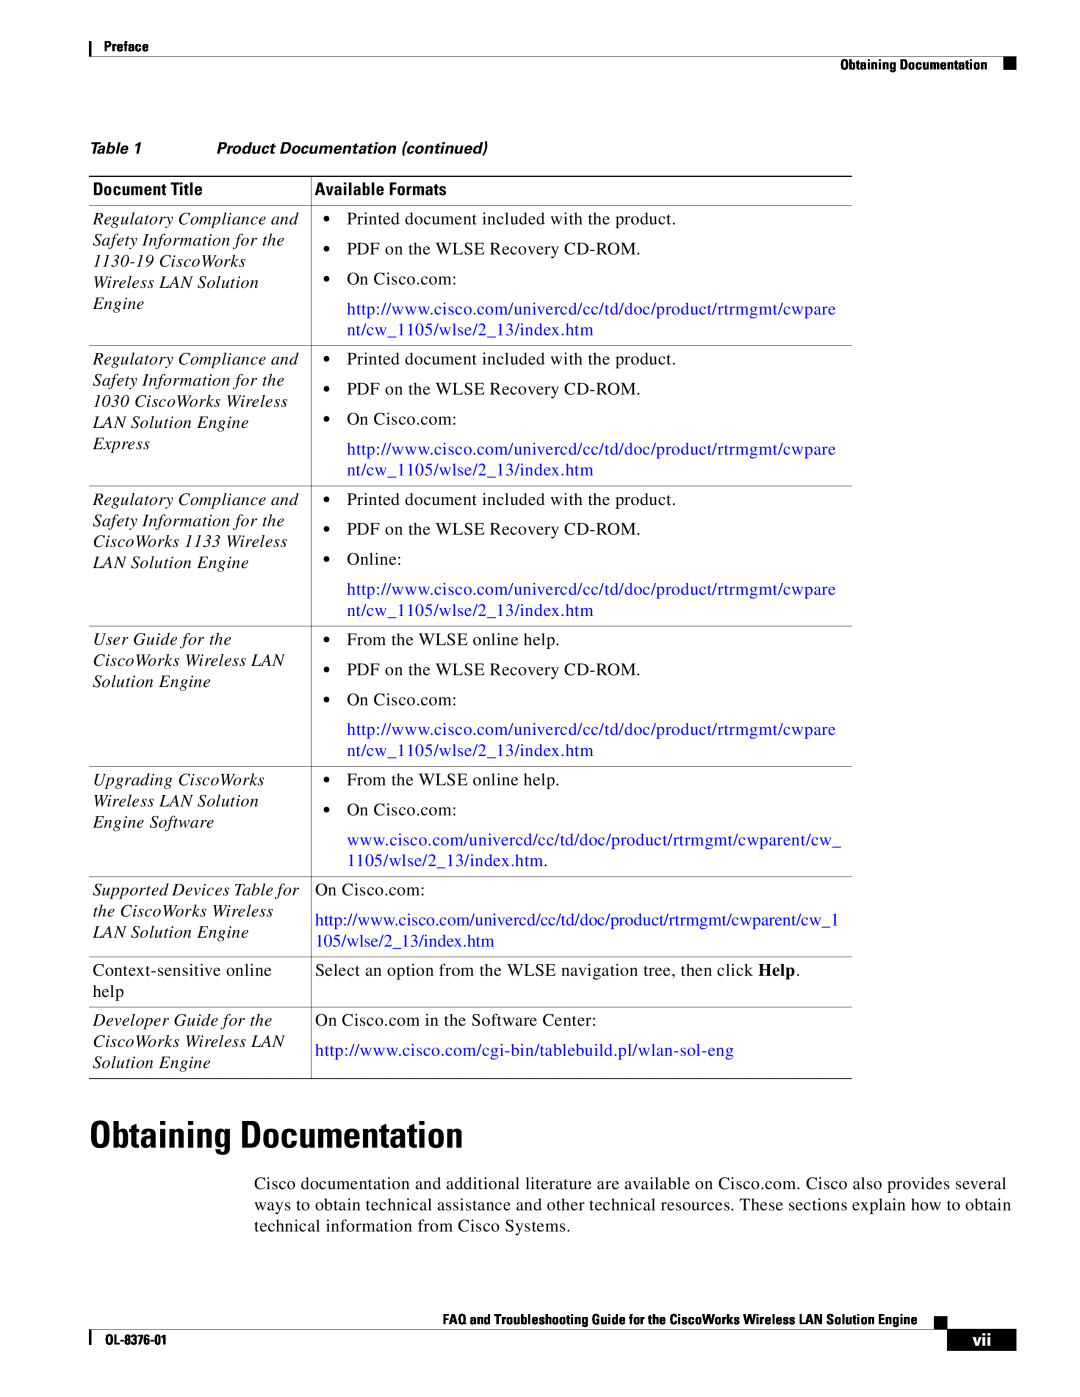 Cisco Systems OL-8376-01 manual Obtaining Documentation, Available Formats 